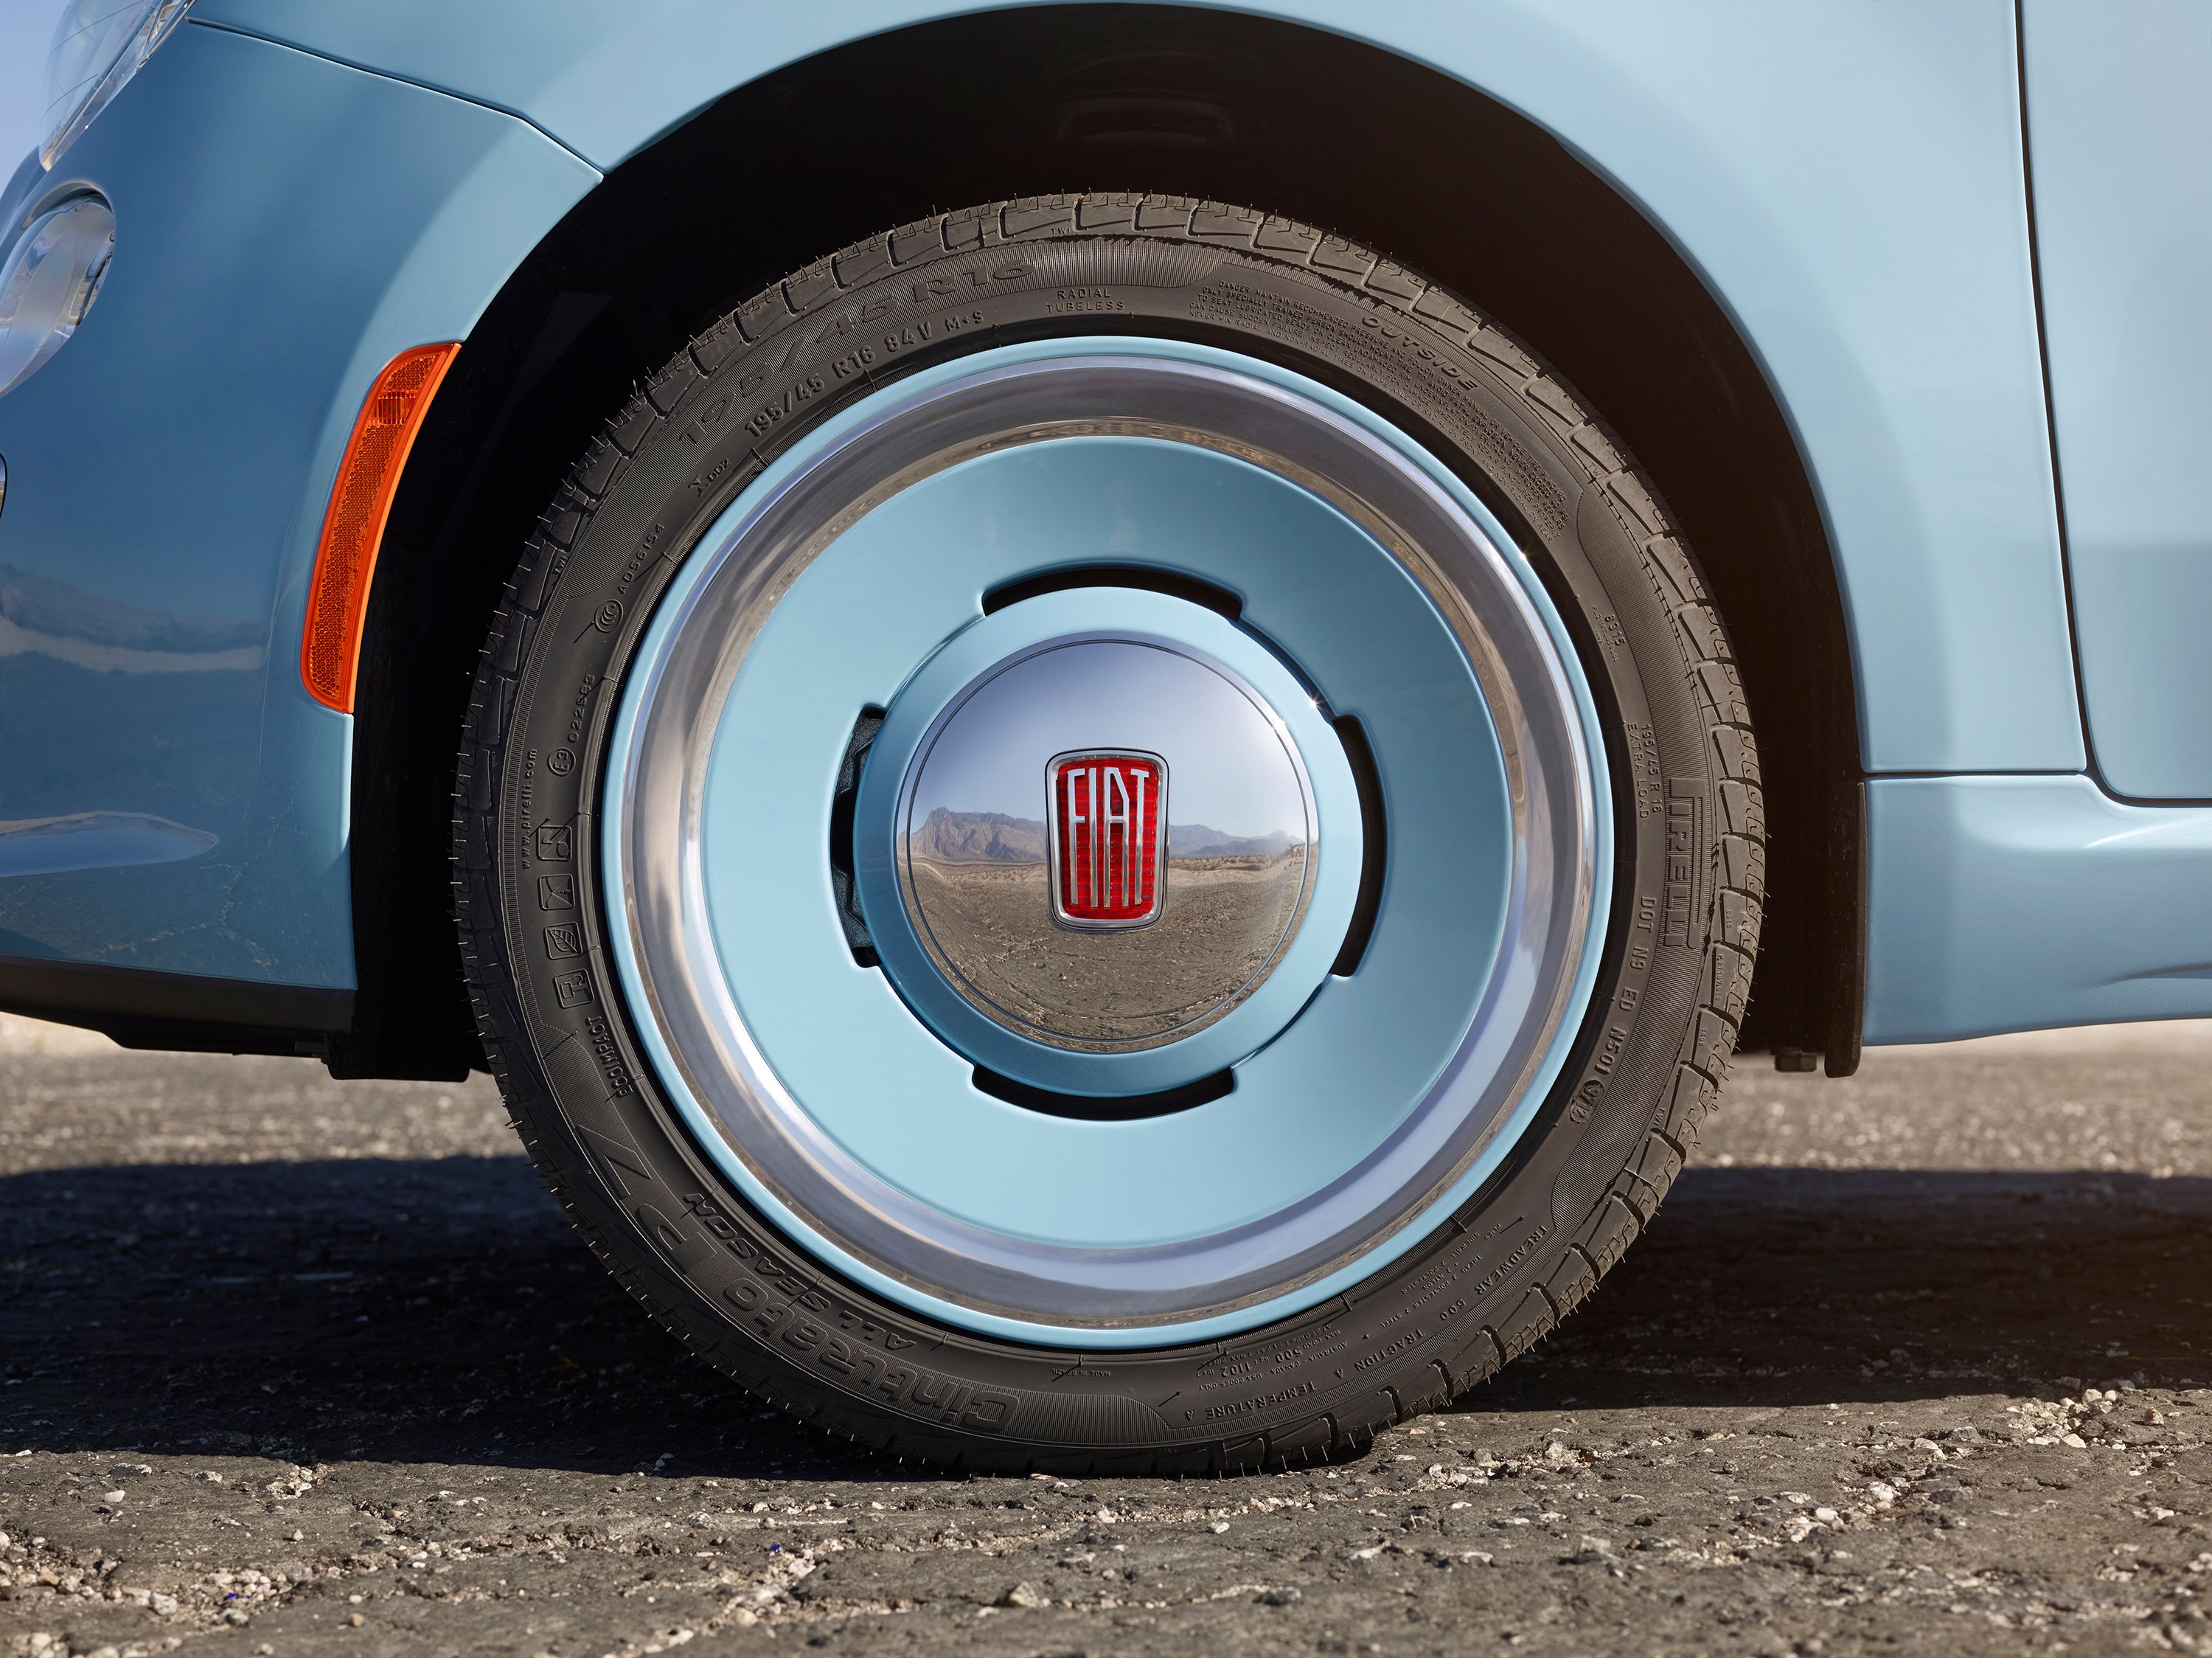 2018 Fiat 500 1957 Edition